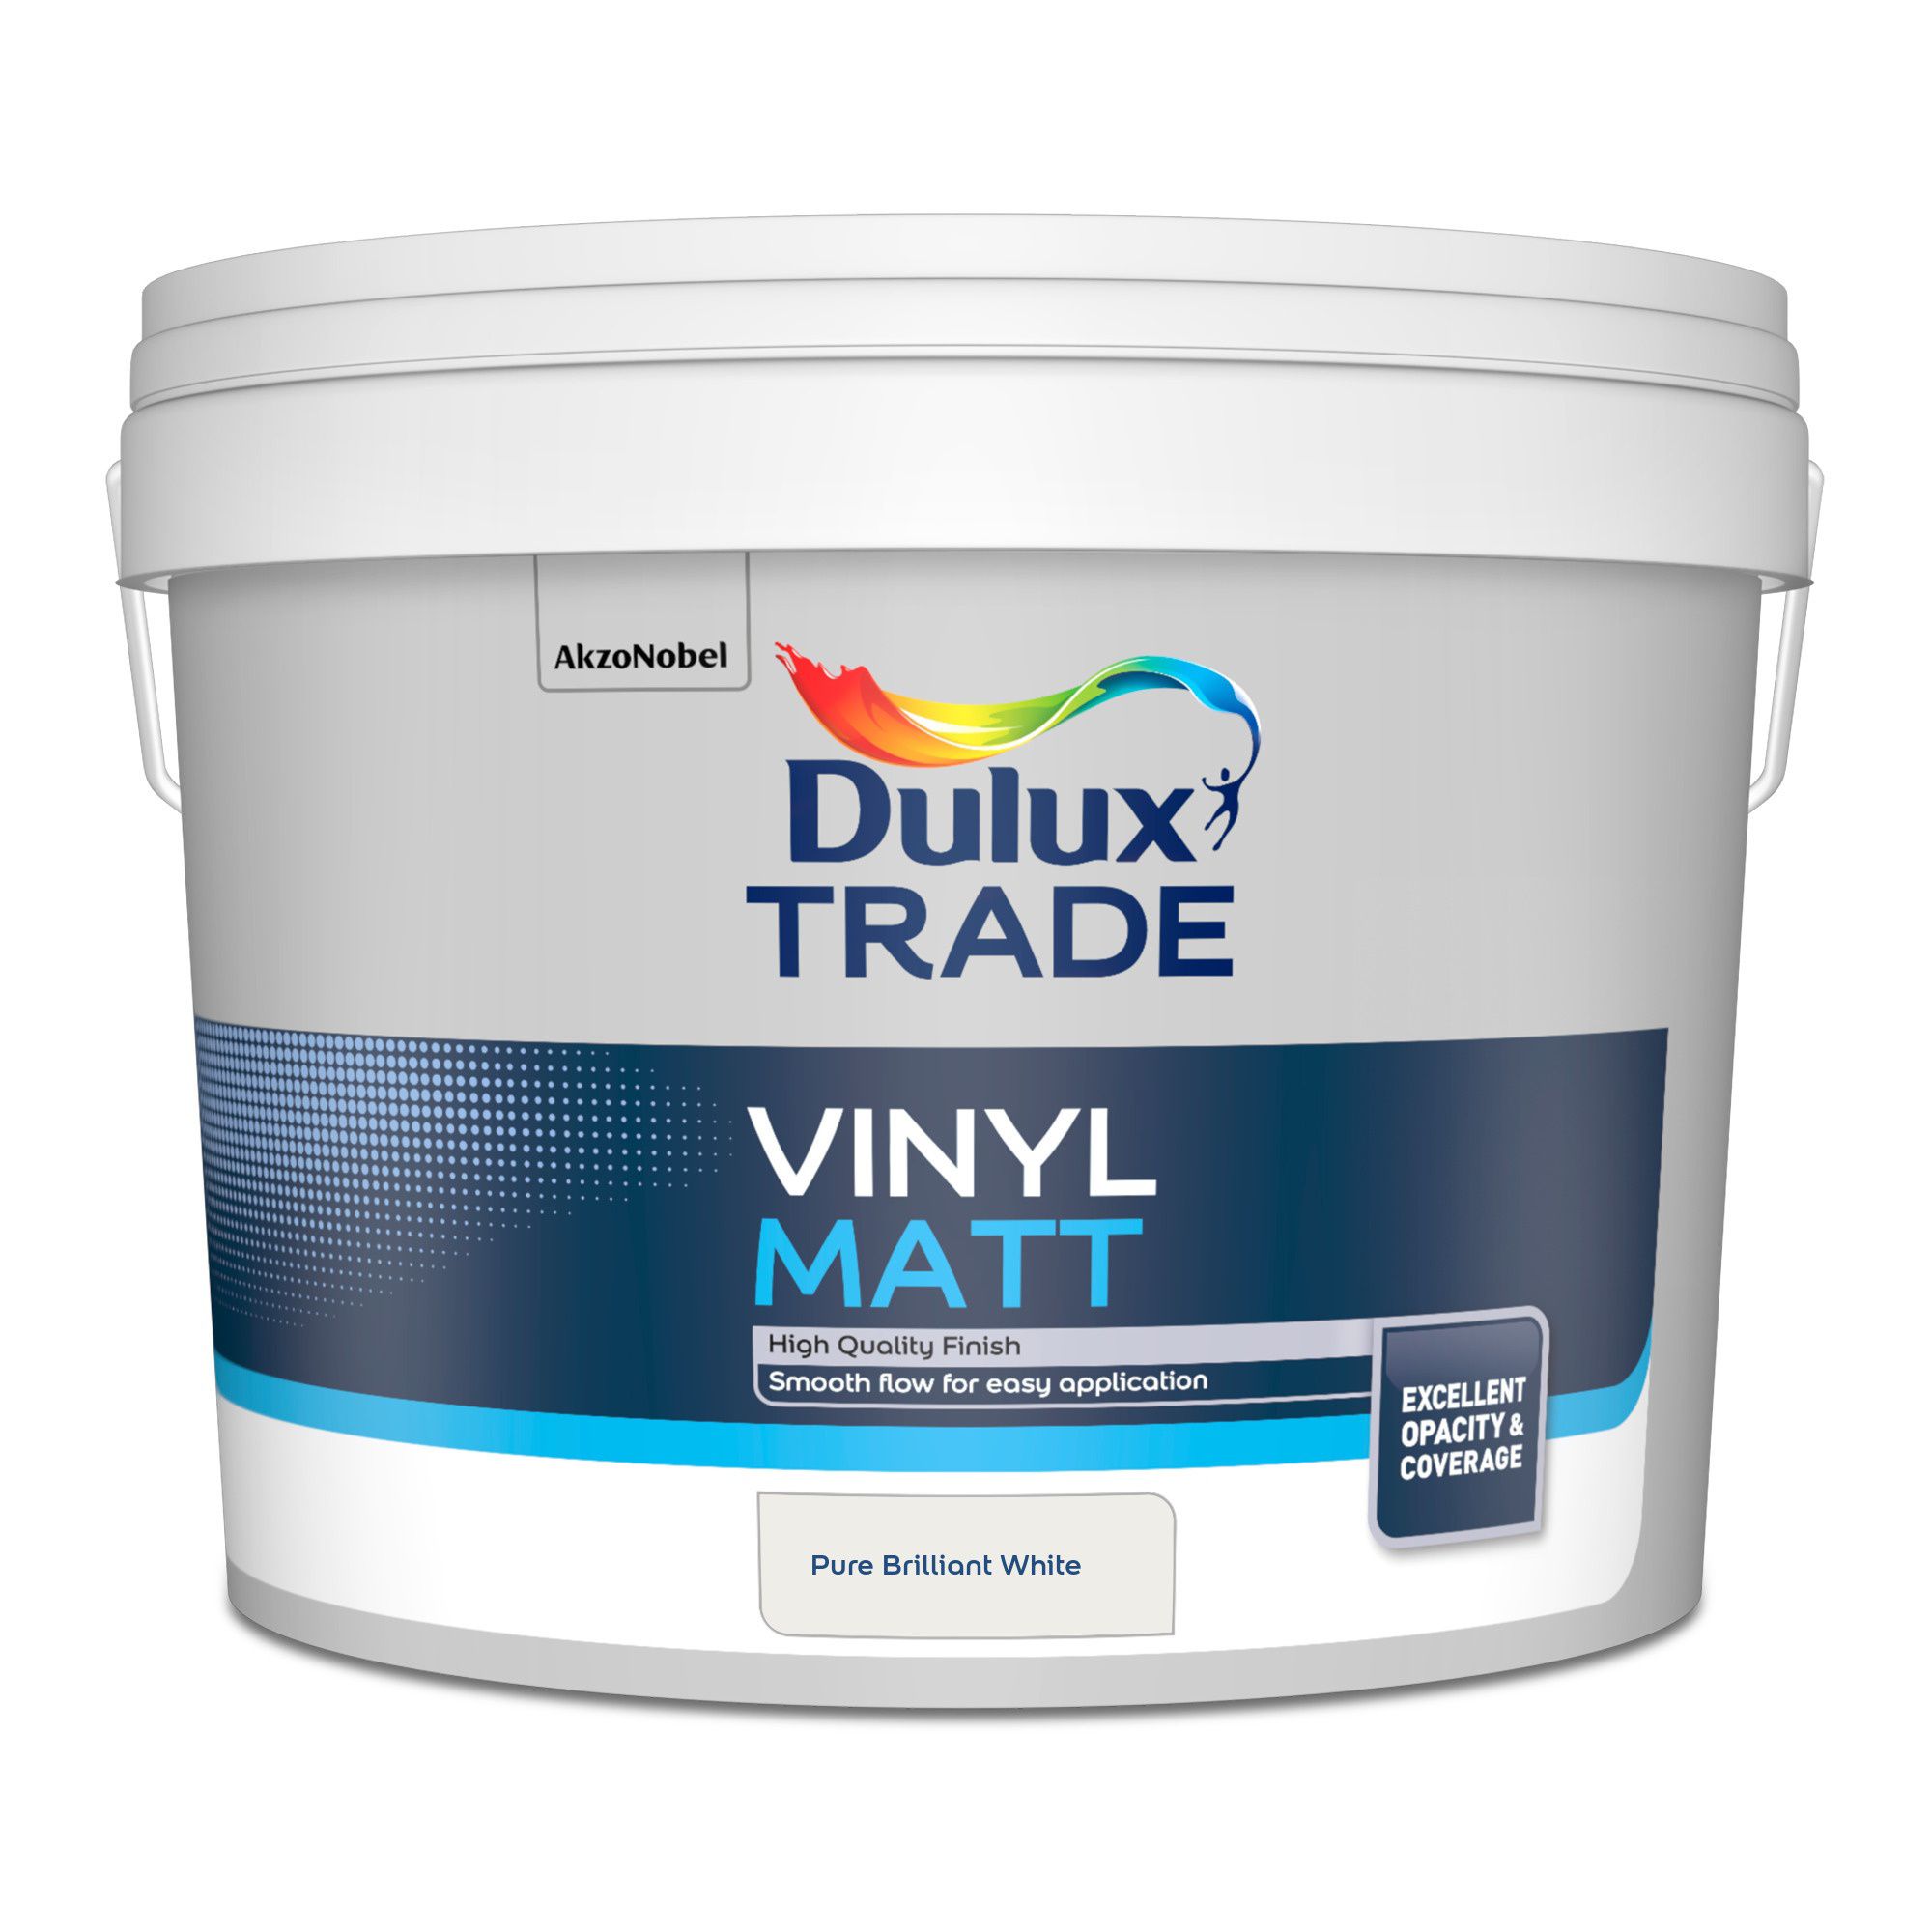 Dulux Trade Pure brilliant white Vinyl matt Emulsion paint, 10L